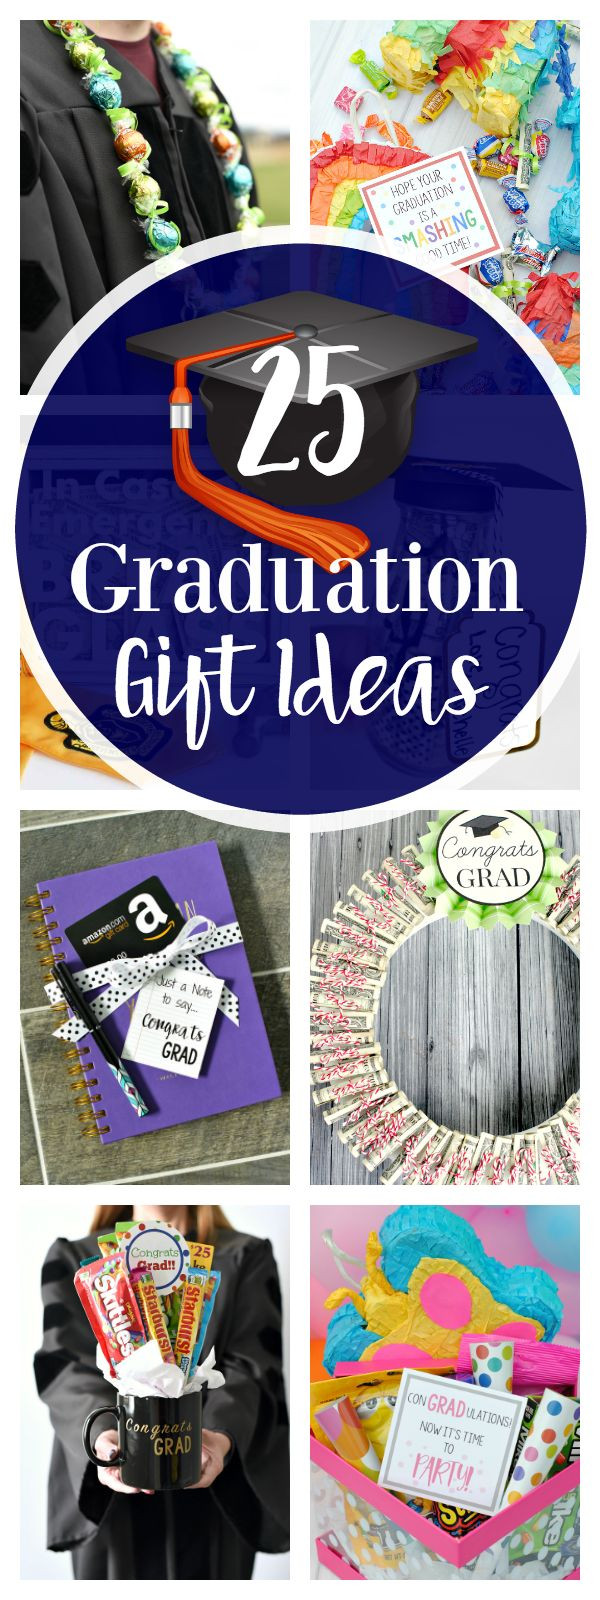 College Graduation Gift Ideas
 Best 25 Graduation ts ideas on Pinterest